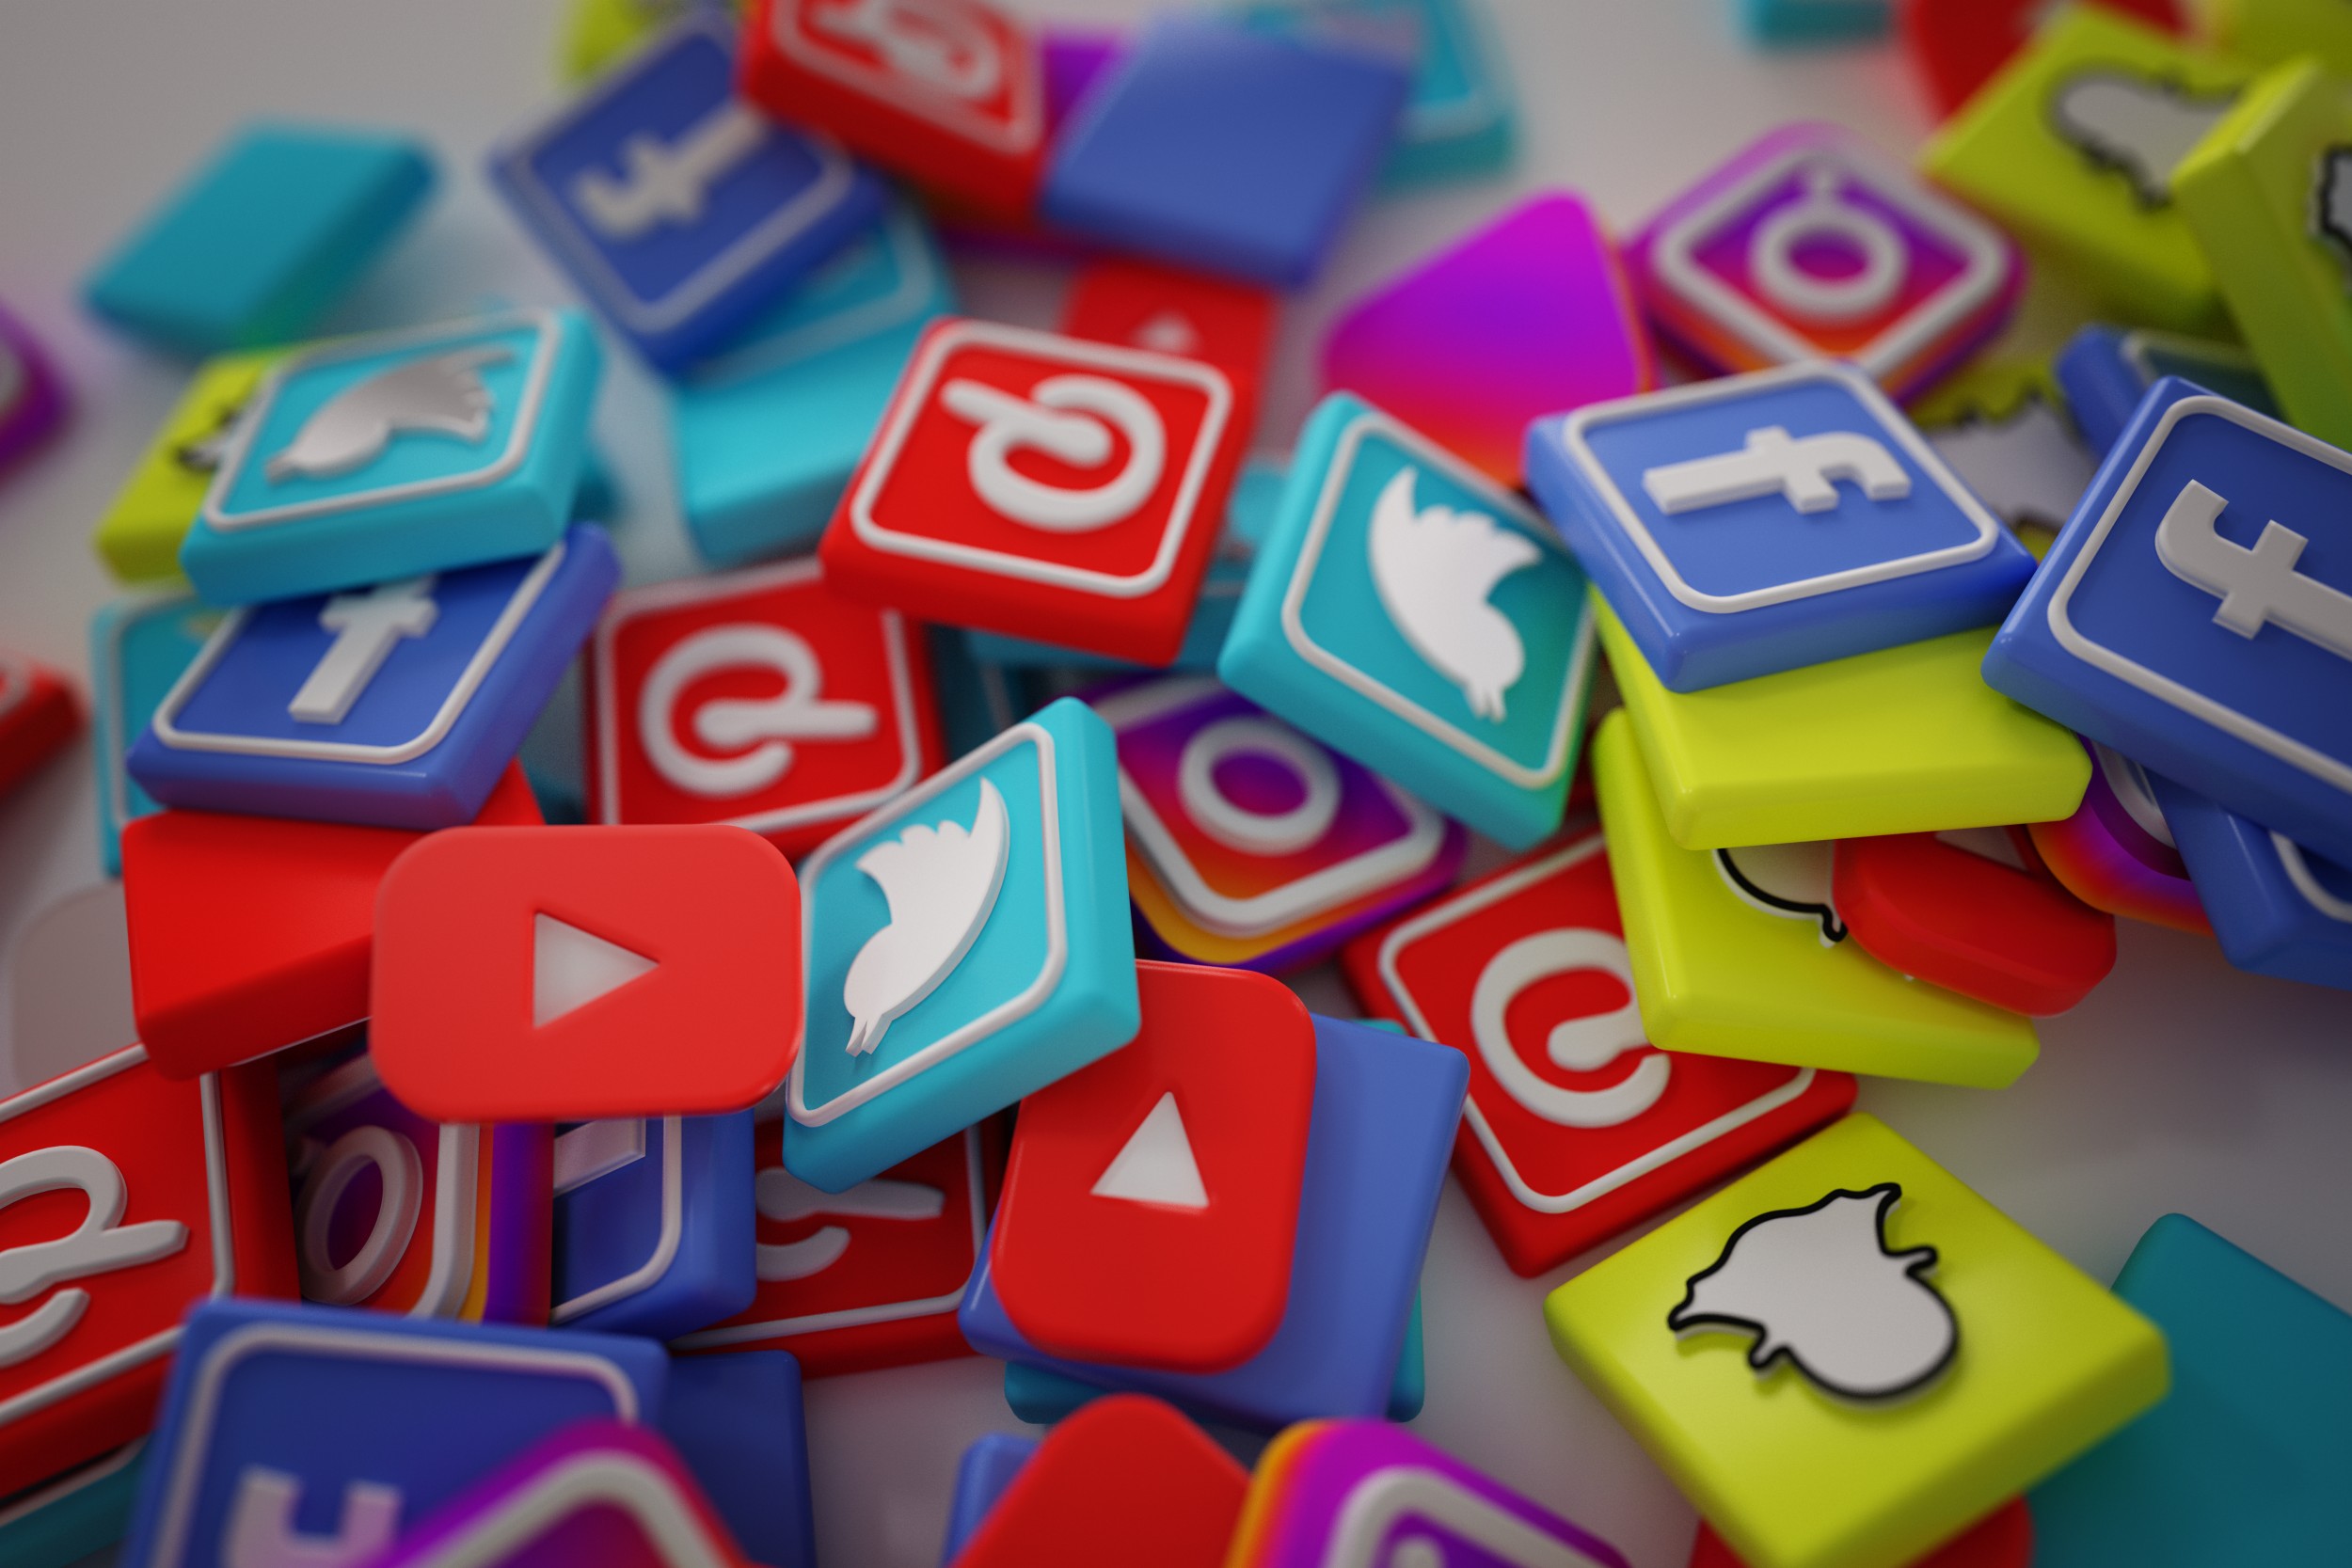 Top 4 Social Media Platforms for Business Marketing